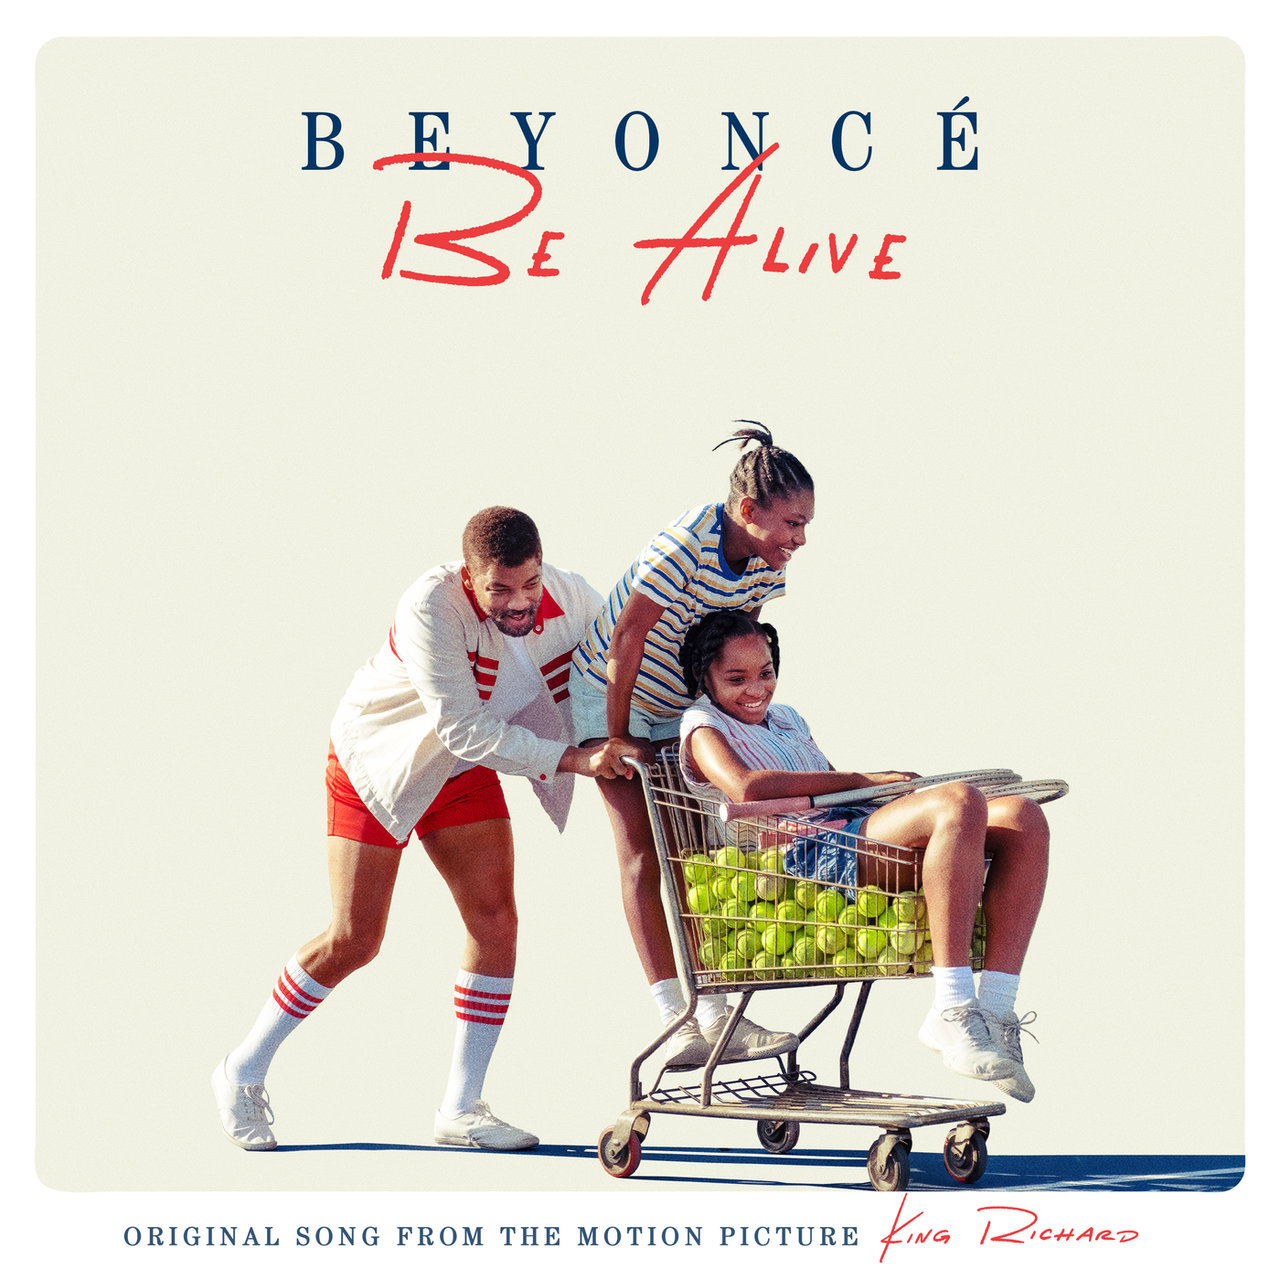 Beyoncé Be Alive cover artwork